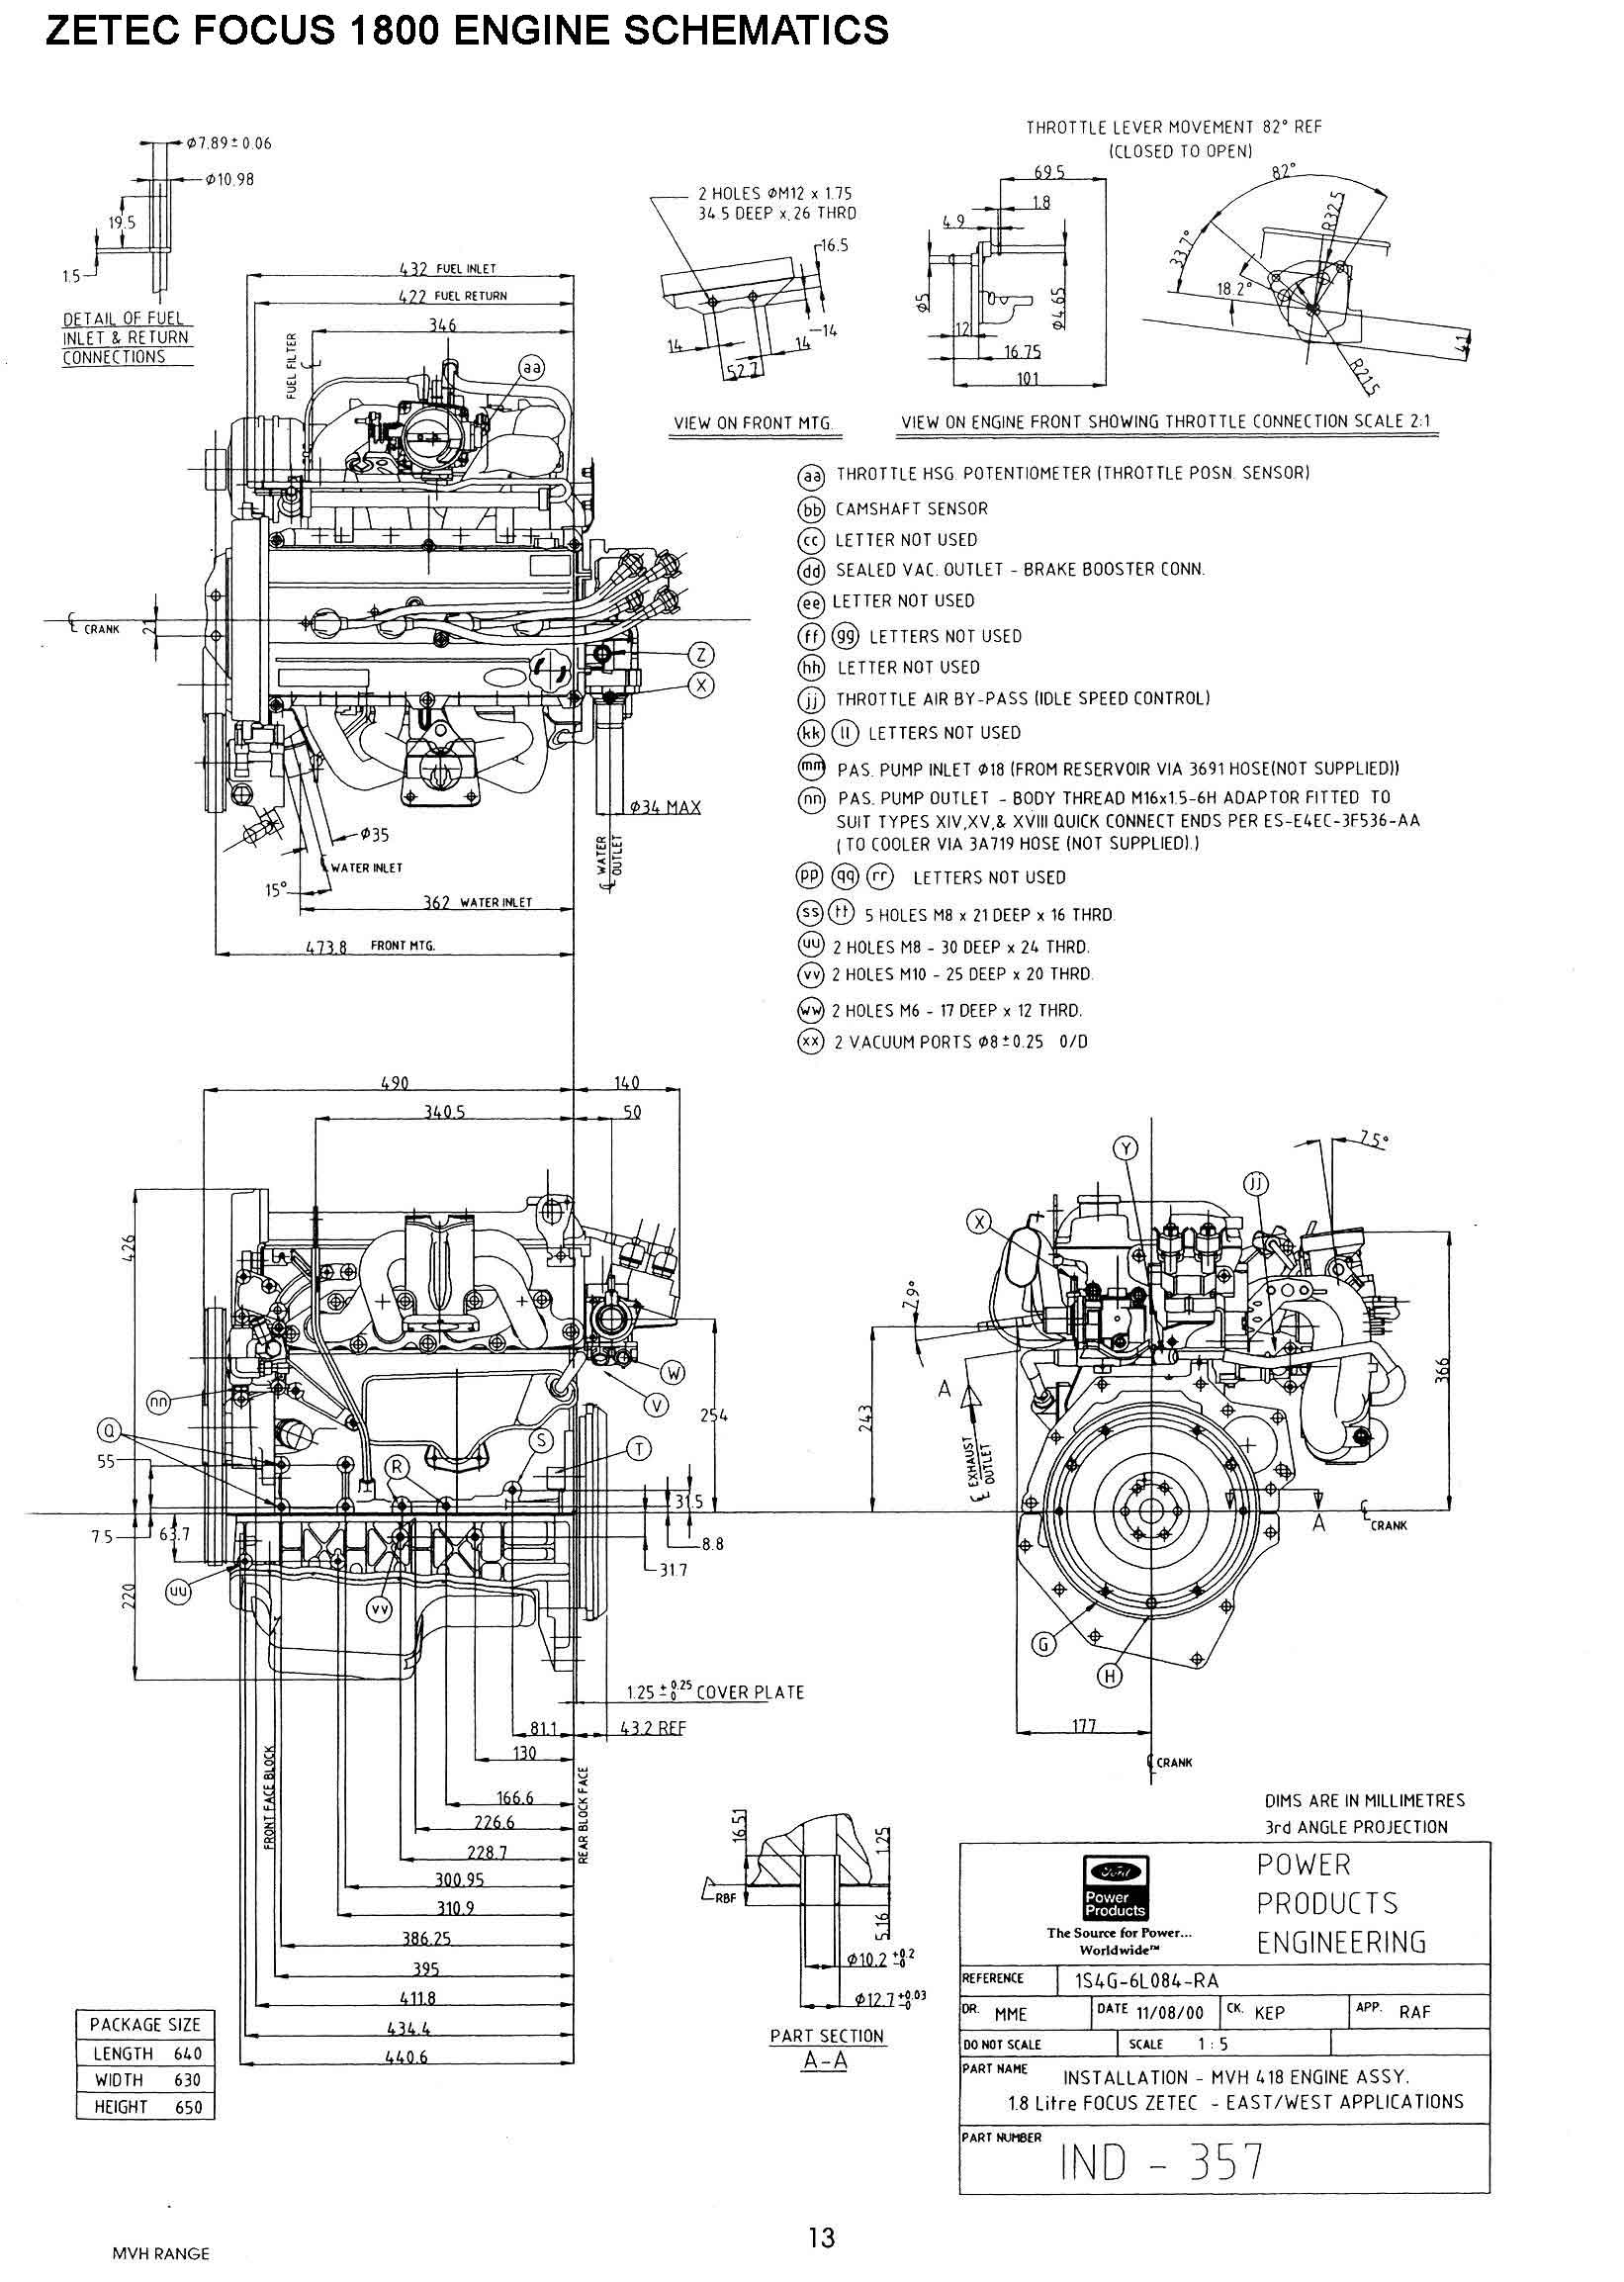 Engine System Failure Ford Focus 1 8 Tdci